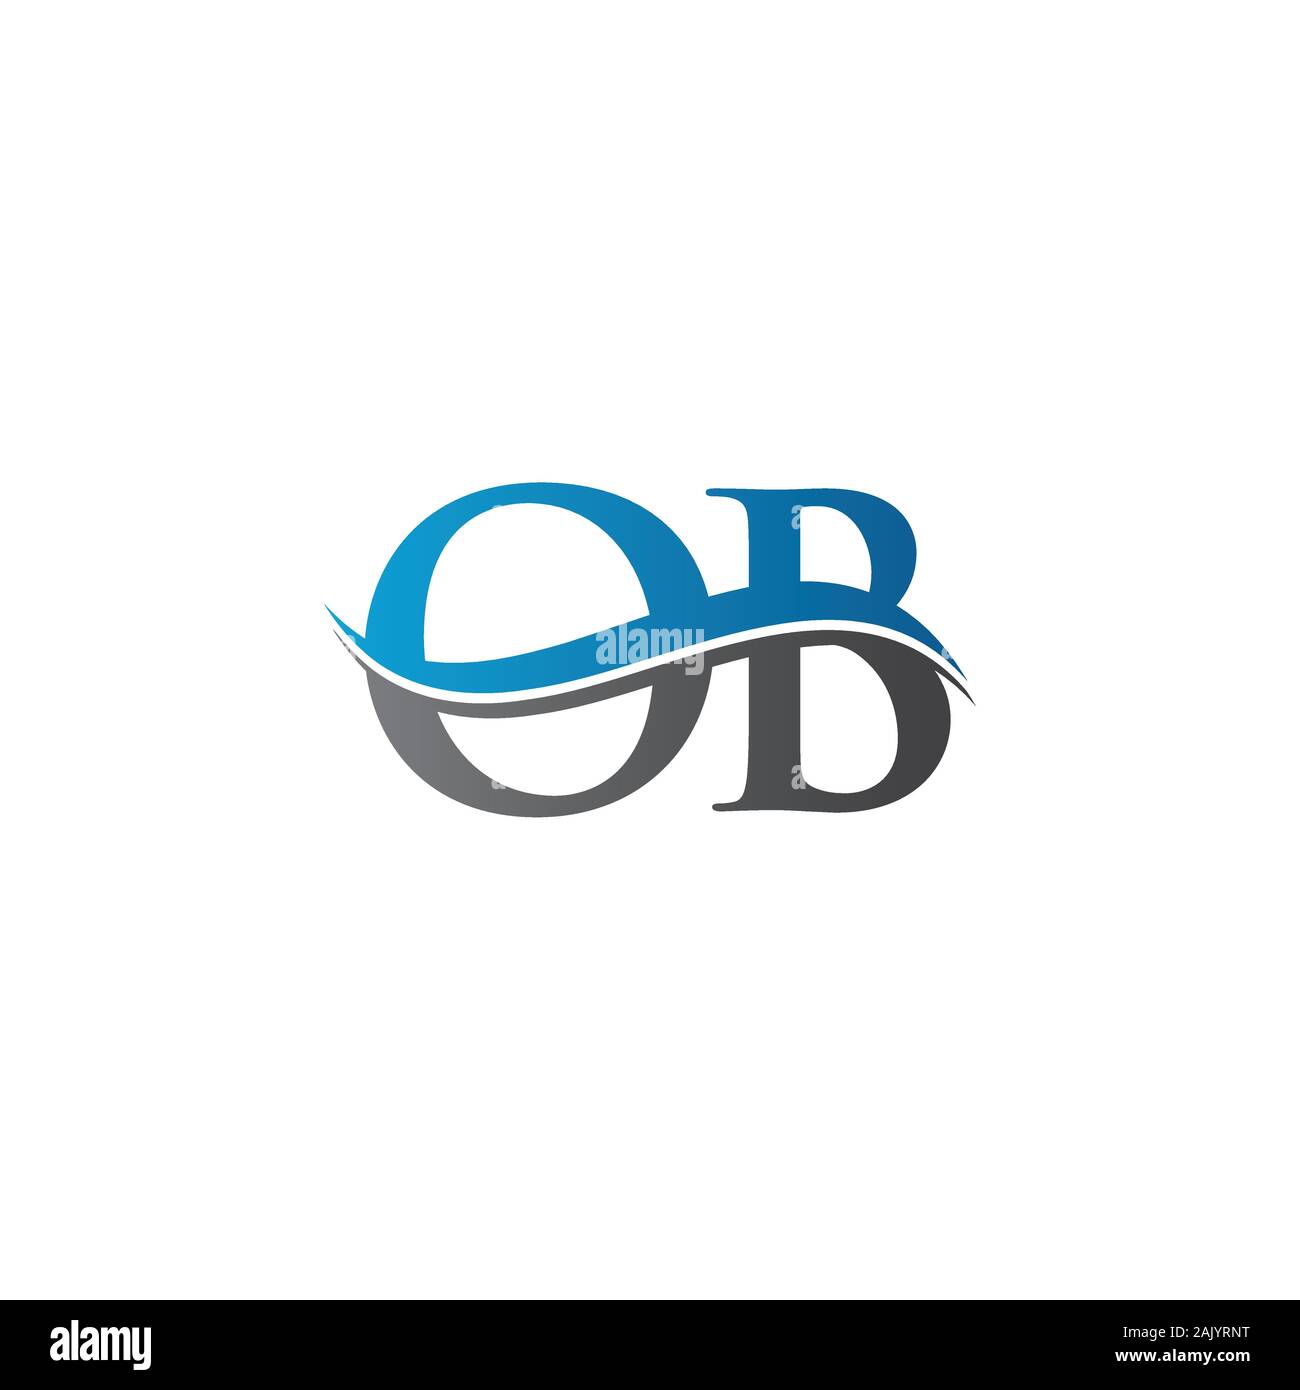 Ob logo letter monogram slash with modern Vector Image